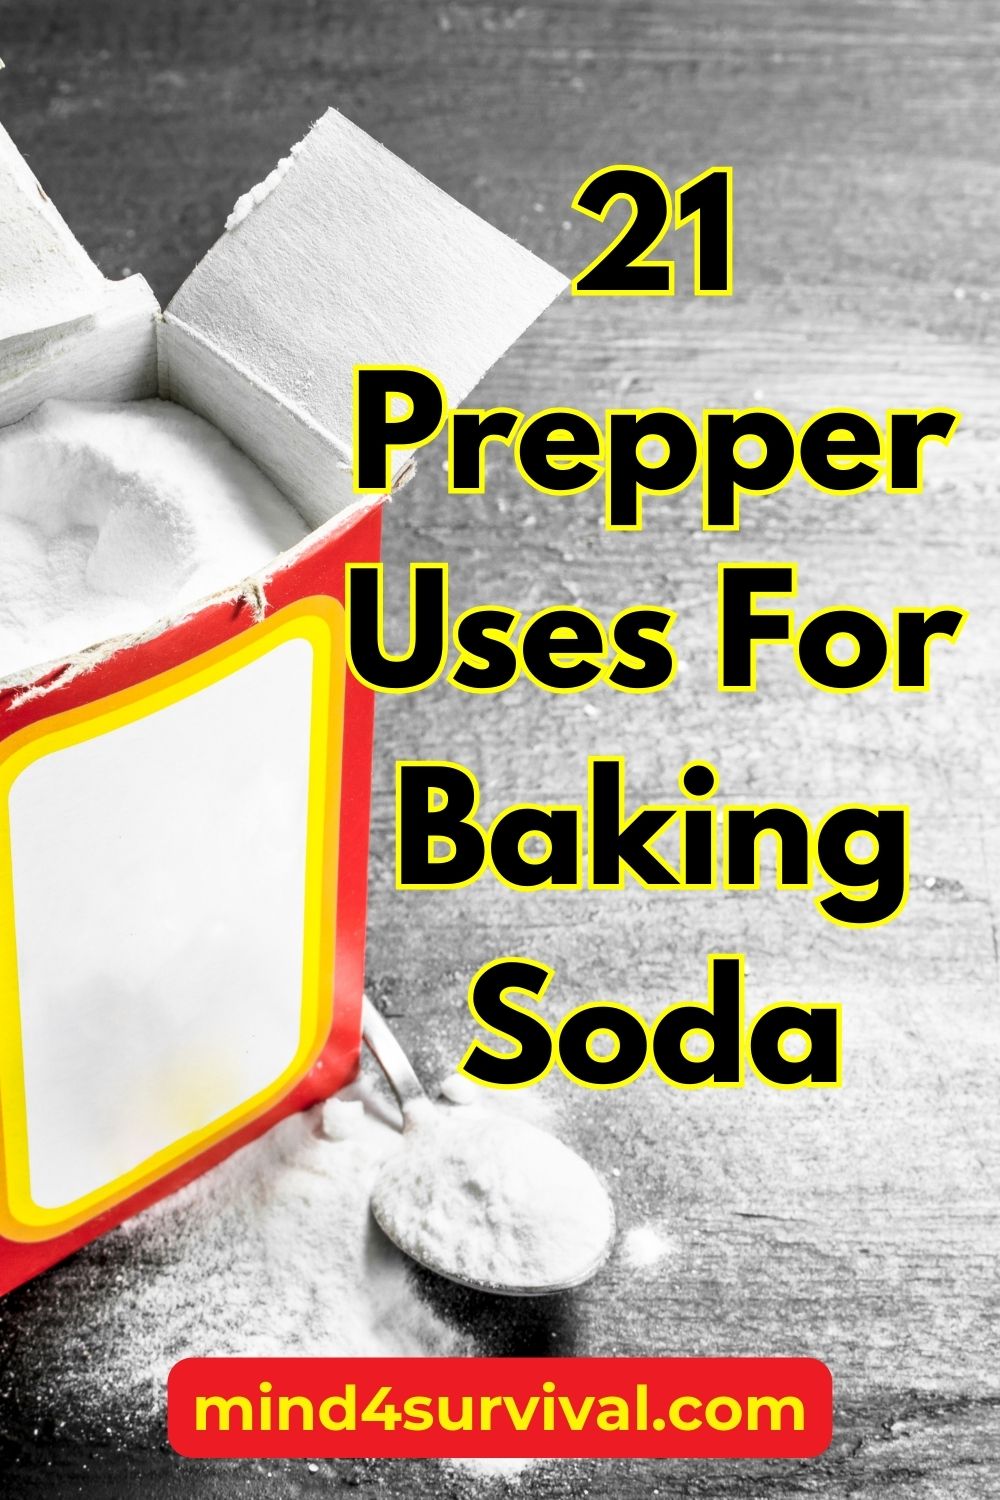 21 Prepper Uses for Baking Soda